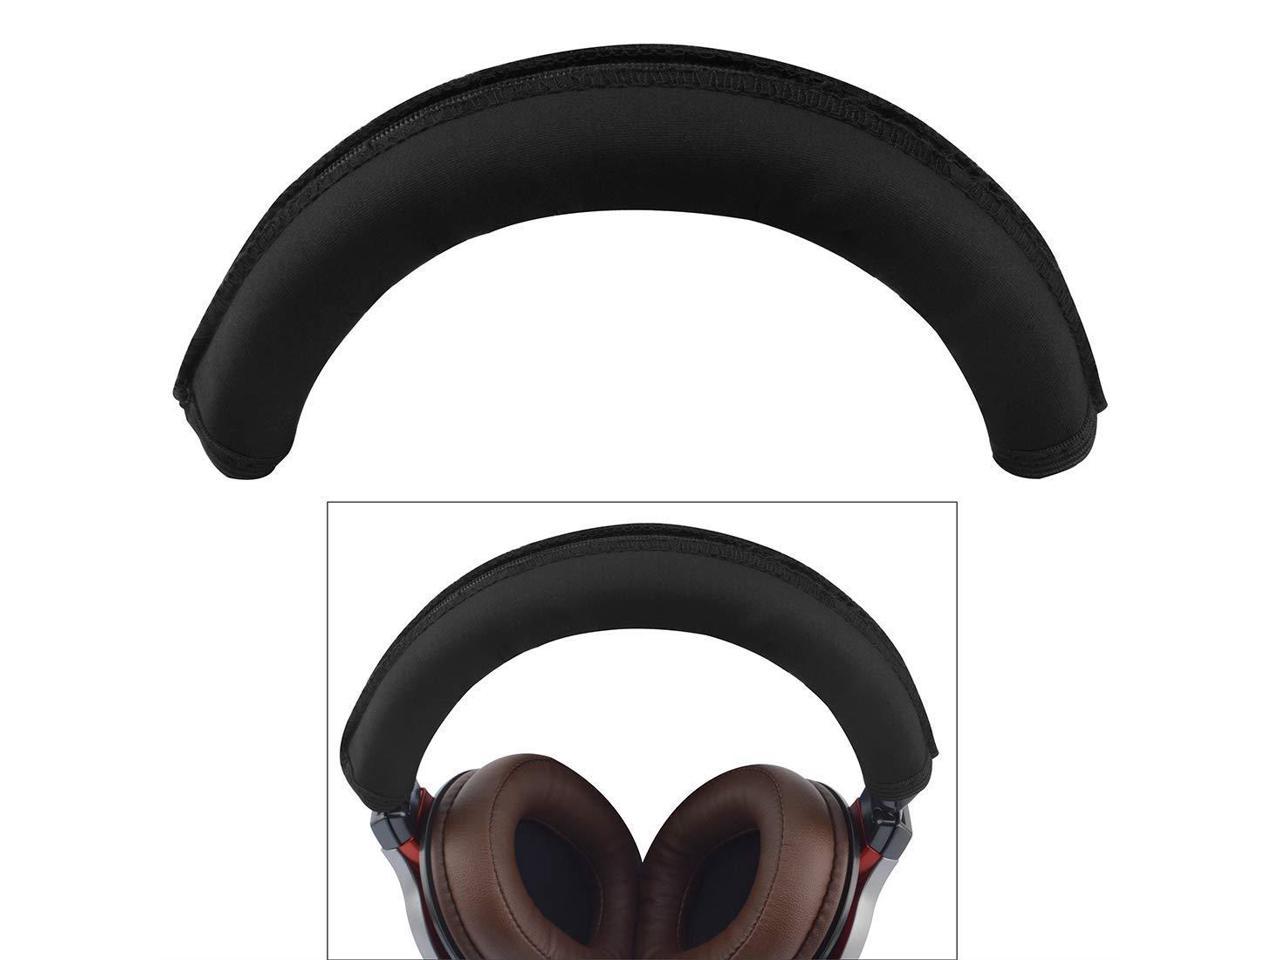 Headband Protective Sleeve Repair Parts Geekria Earpads and Headband Cover Compatible with ATH-MSR7 MSR7NC MSR7GM Headphones/Ear Cushion Headband Protector Cover/Earpads MSR7BK